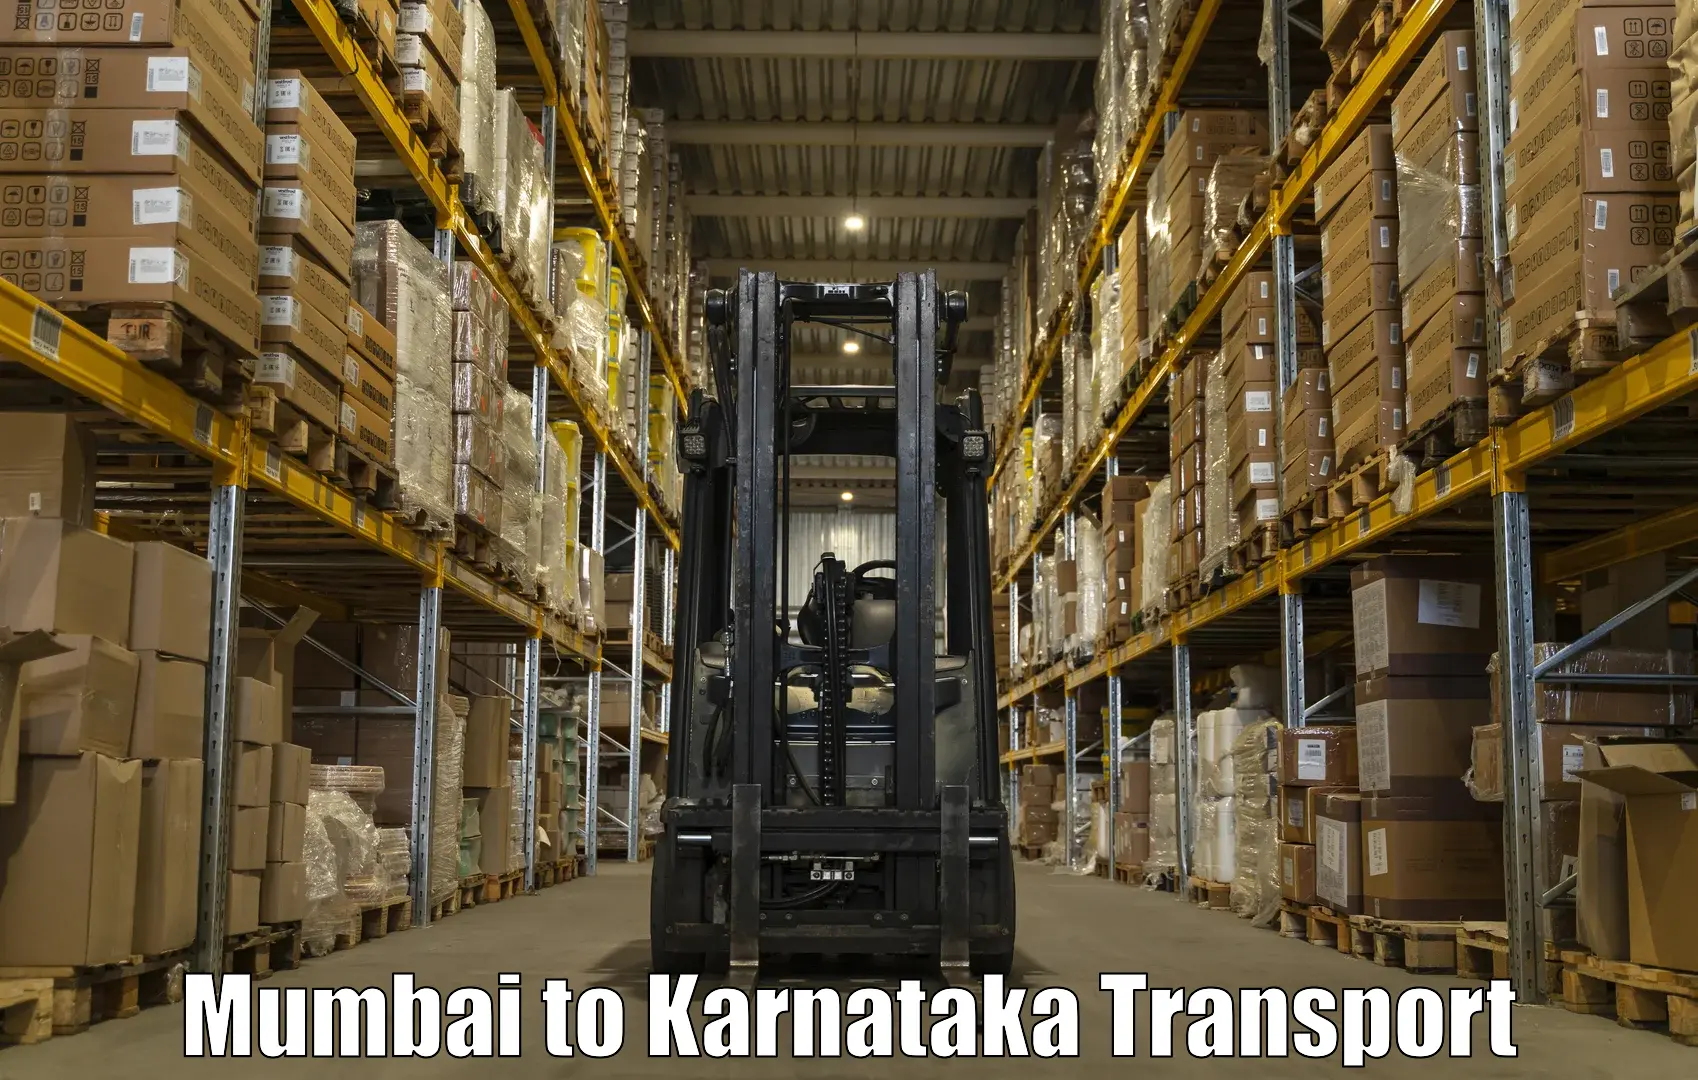 Truck transport companies in India Mumbai to Mulbagal